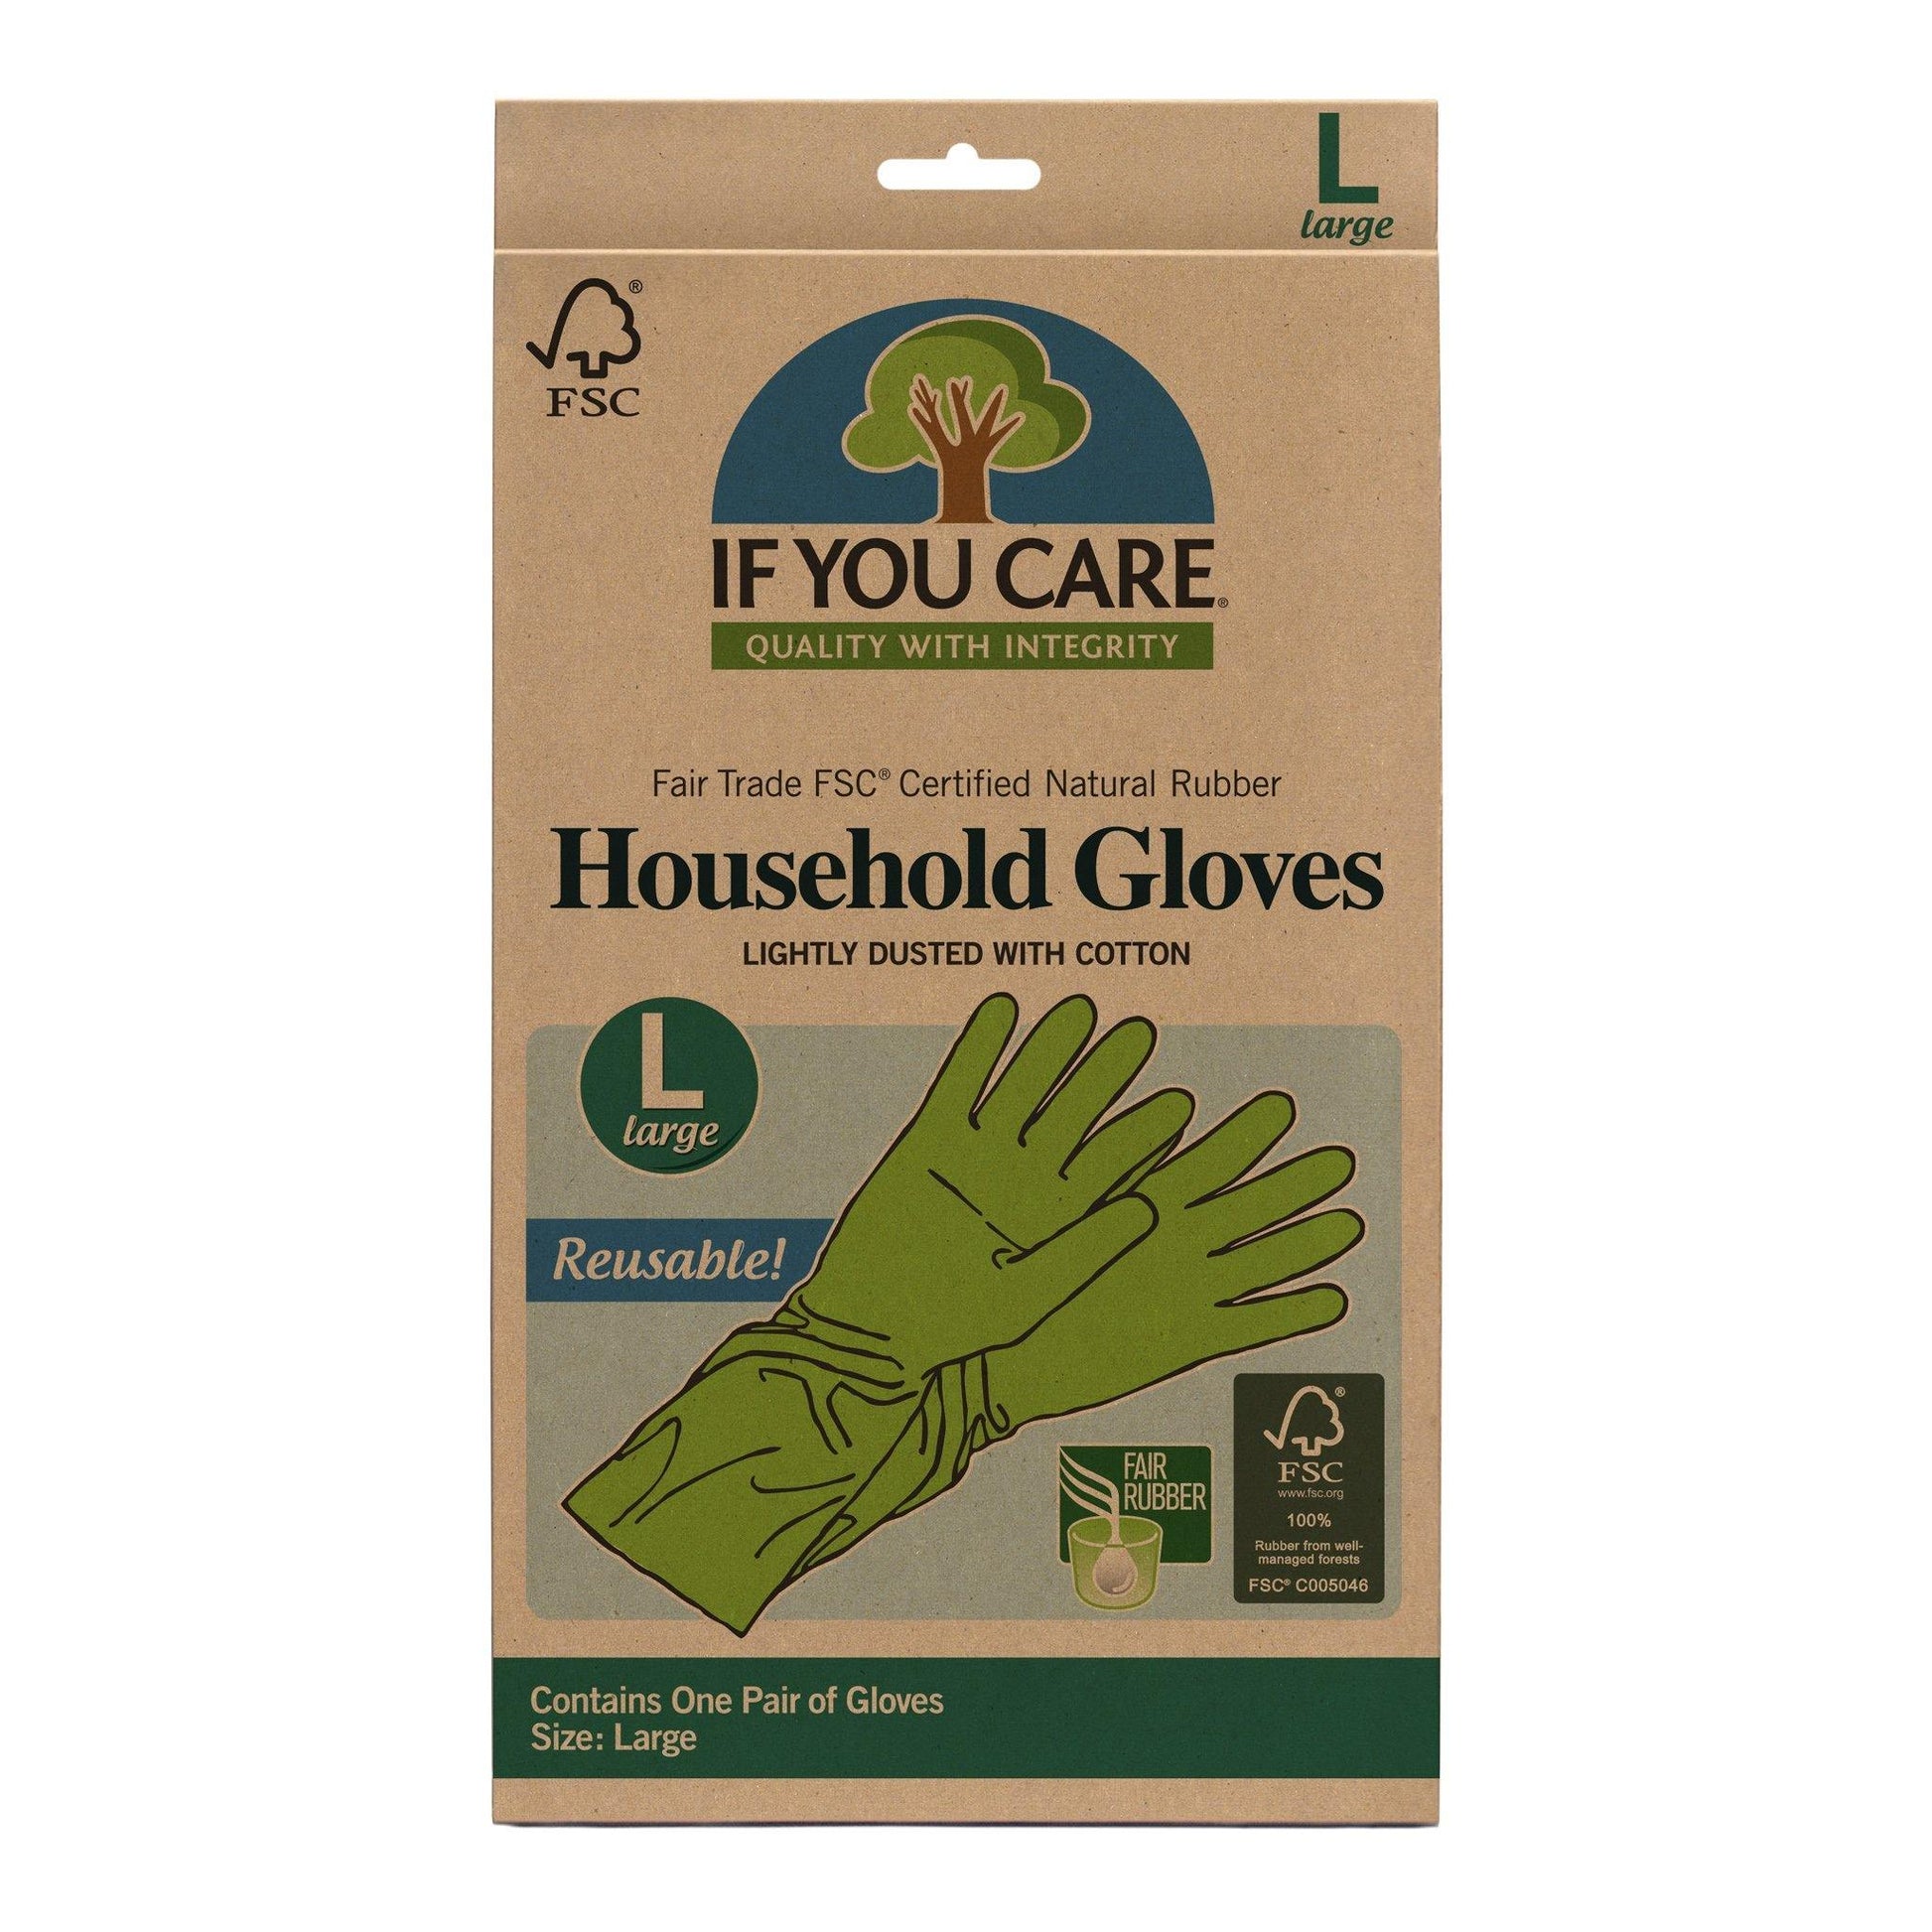 Household Gloves Large